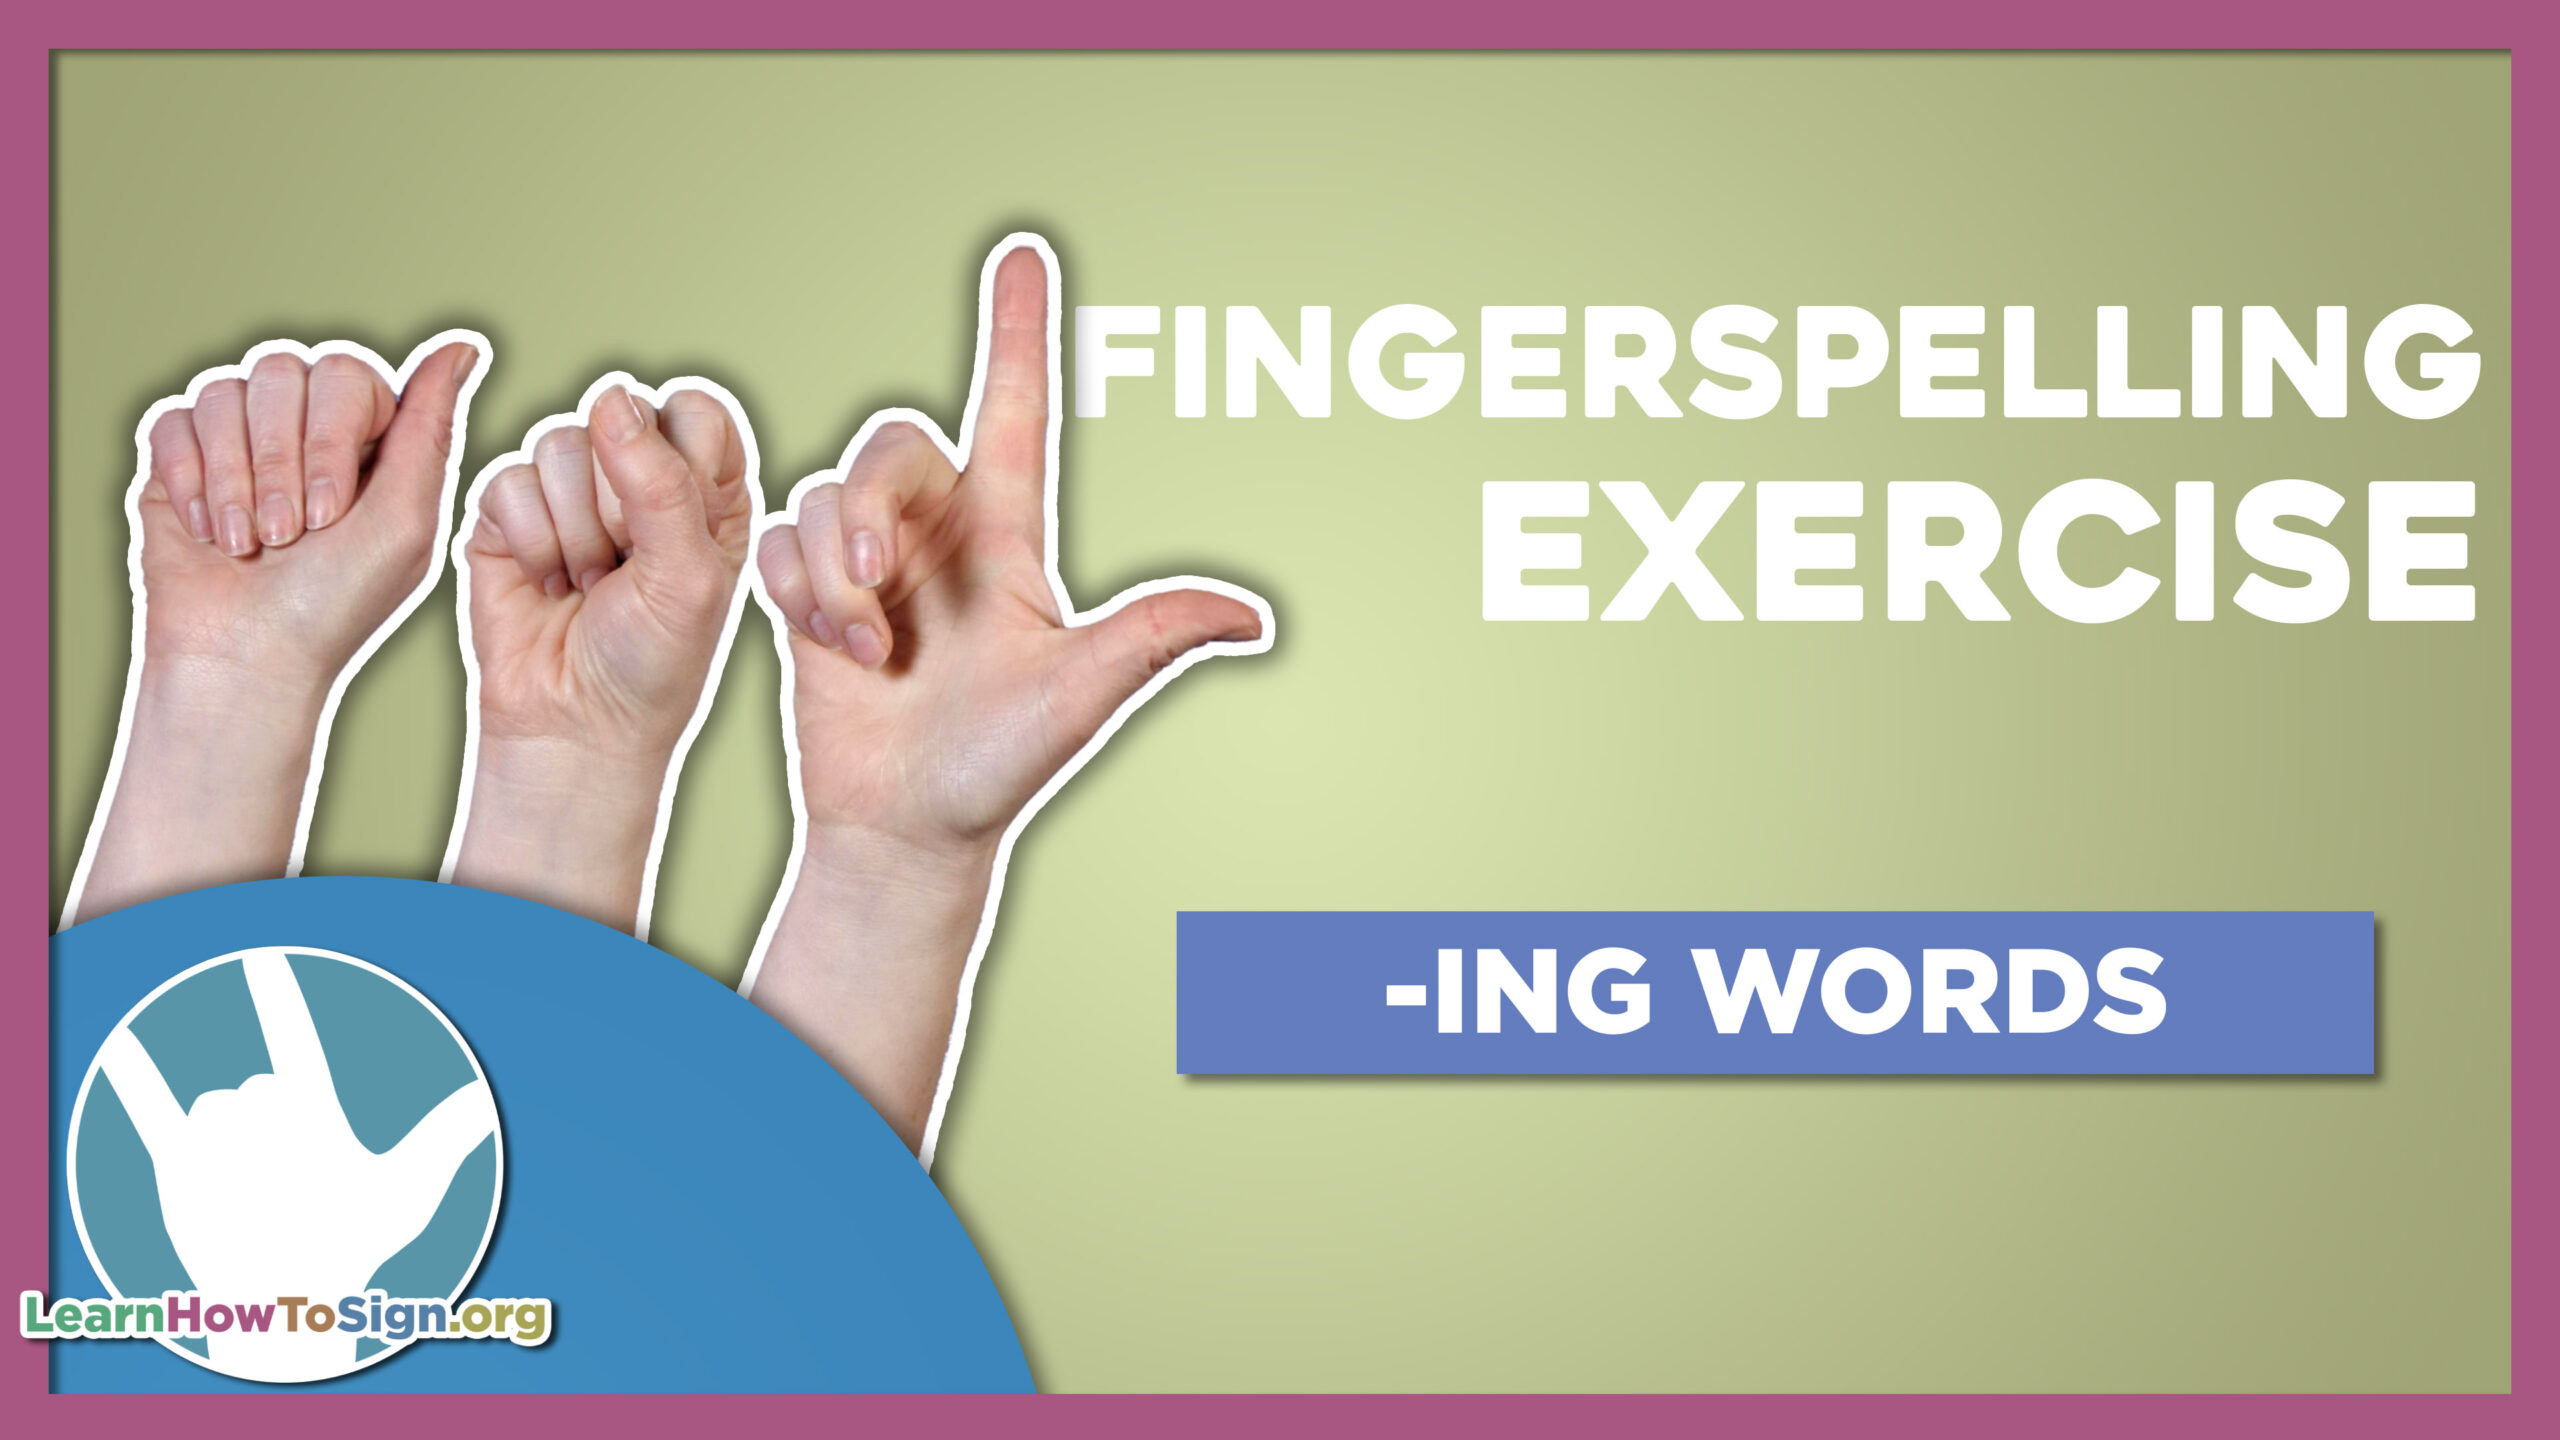 Fingerspelling Exercise: - ING Words